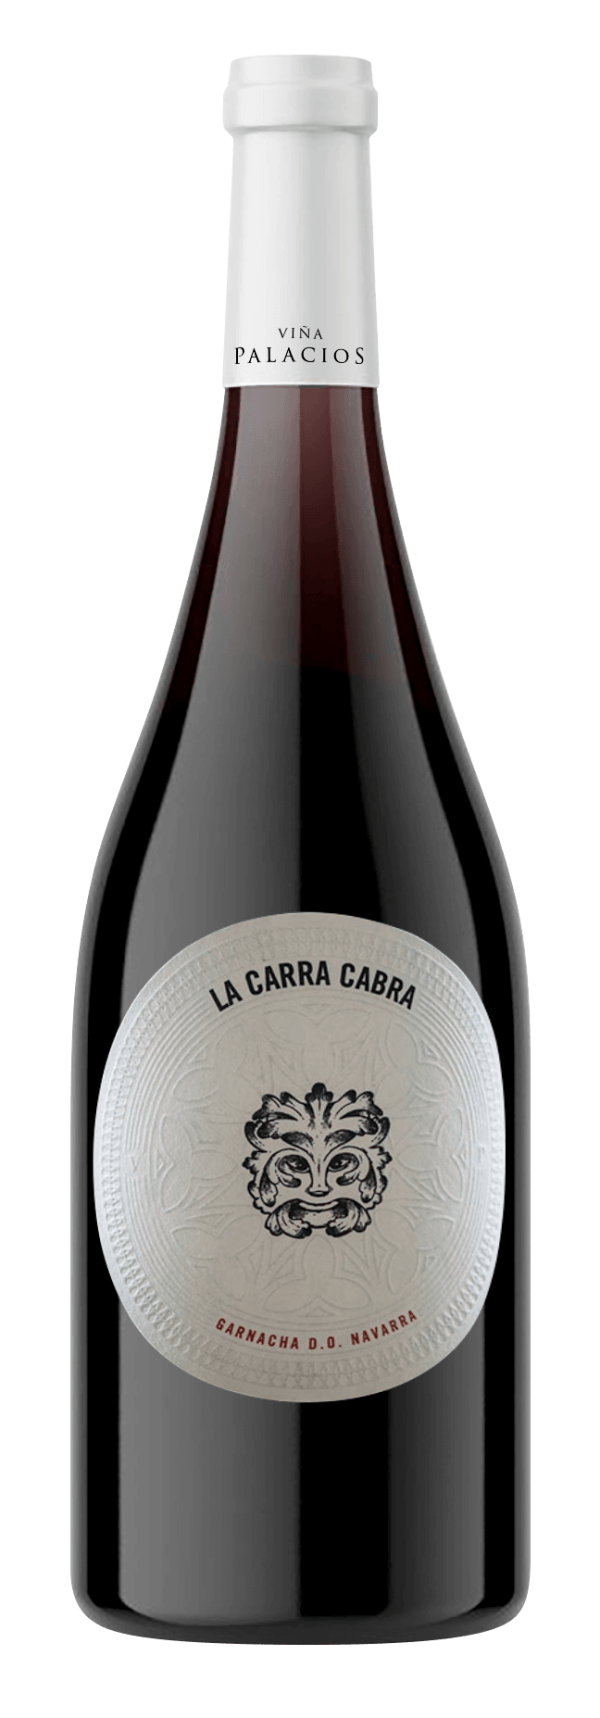 Botella de vino tinto de uva garnacha LA CARRA CABRA de Viña Palacios